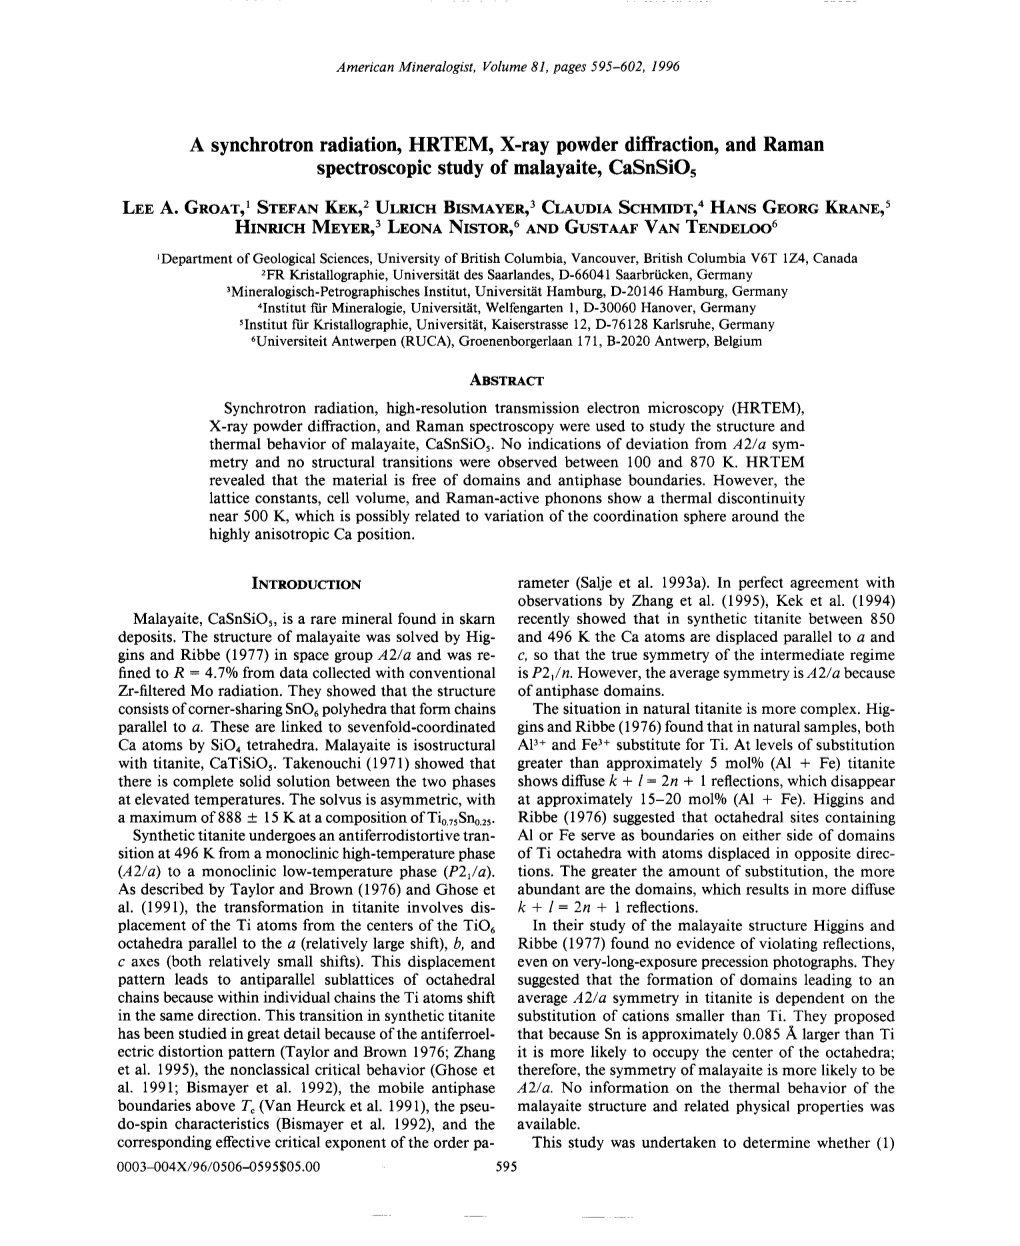 A Synchrotron Radiation, HRTEM, X-Ray Powder Diffraction, and Raman Spectroscopic Study of Malayaite, Casnsios